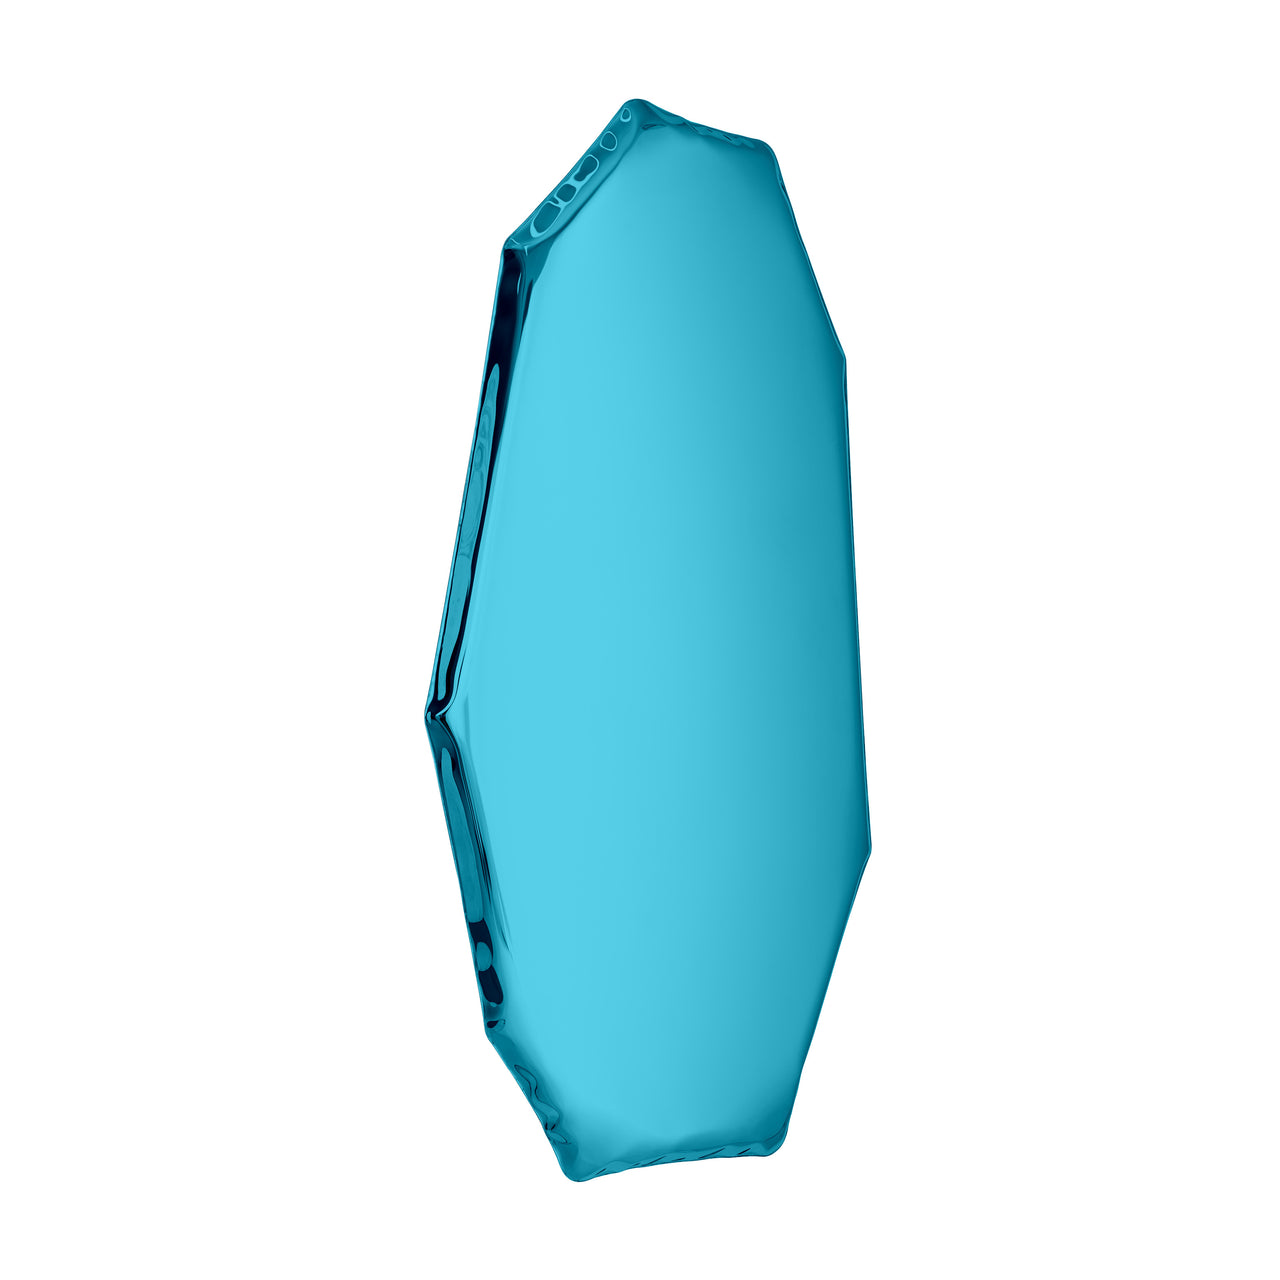 Tafla Polygonal Mirror Collection: Gradient + Mirror C3 + Sapphire